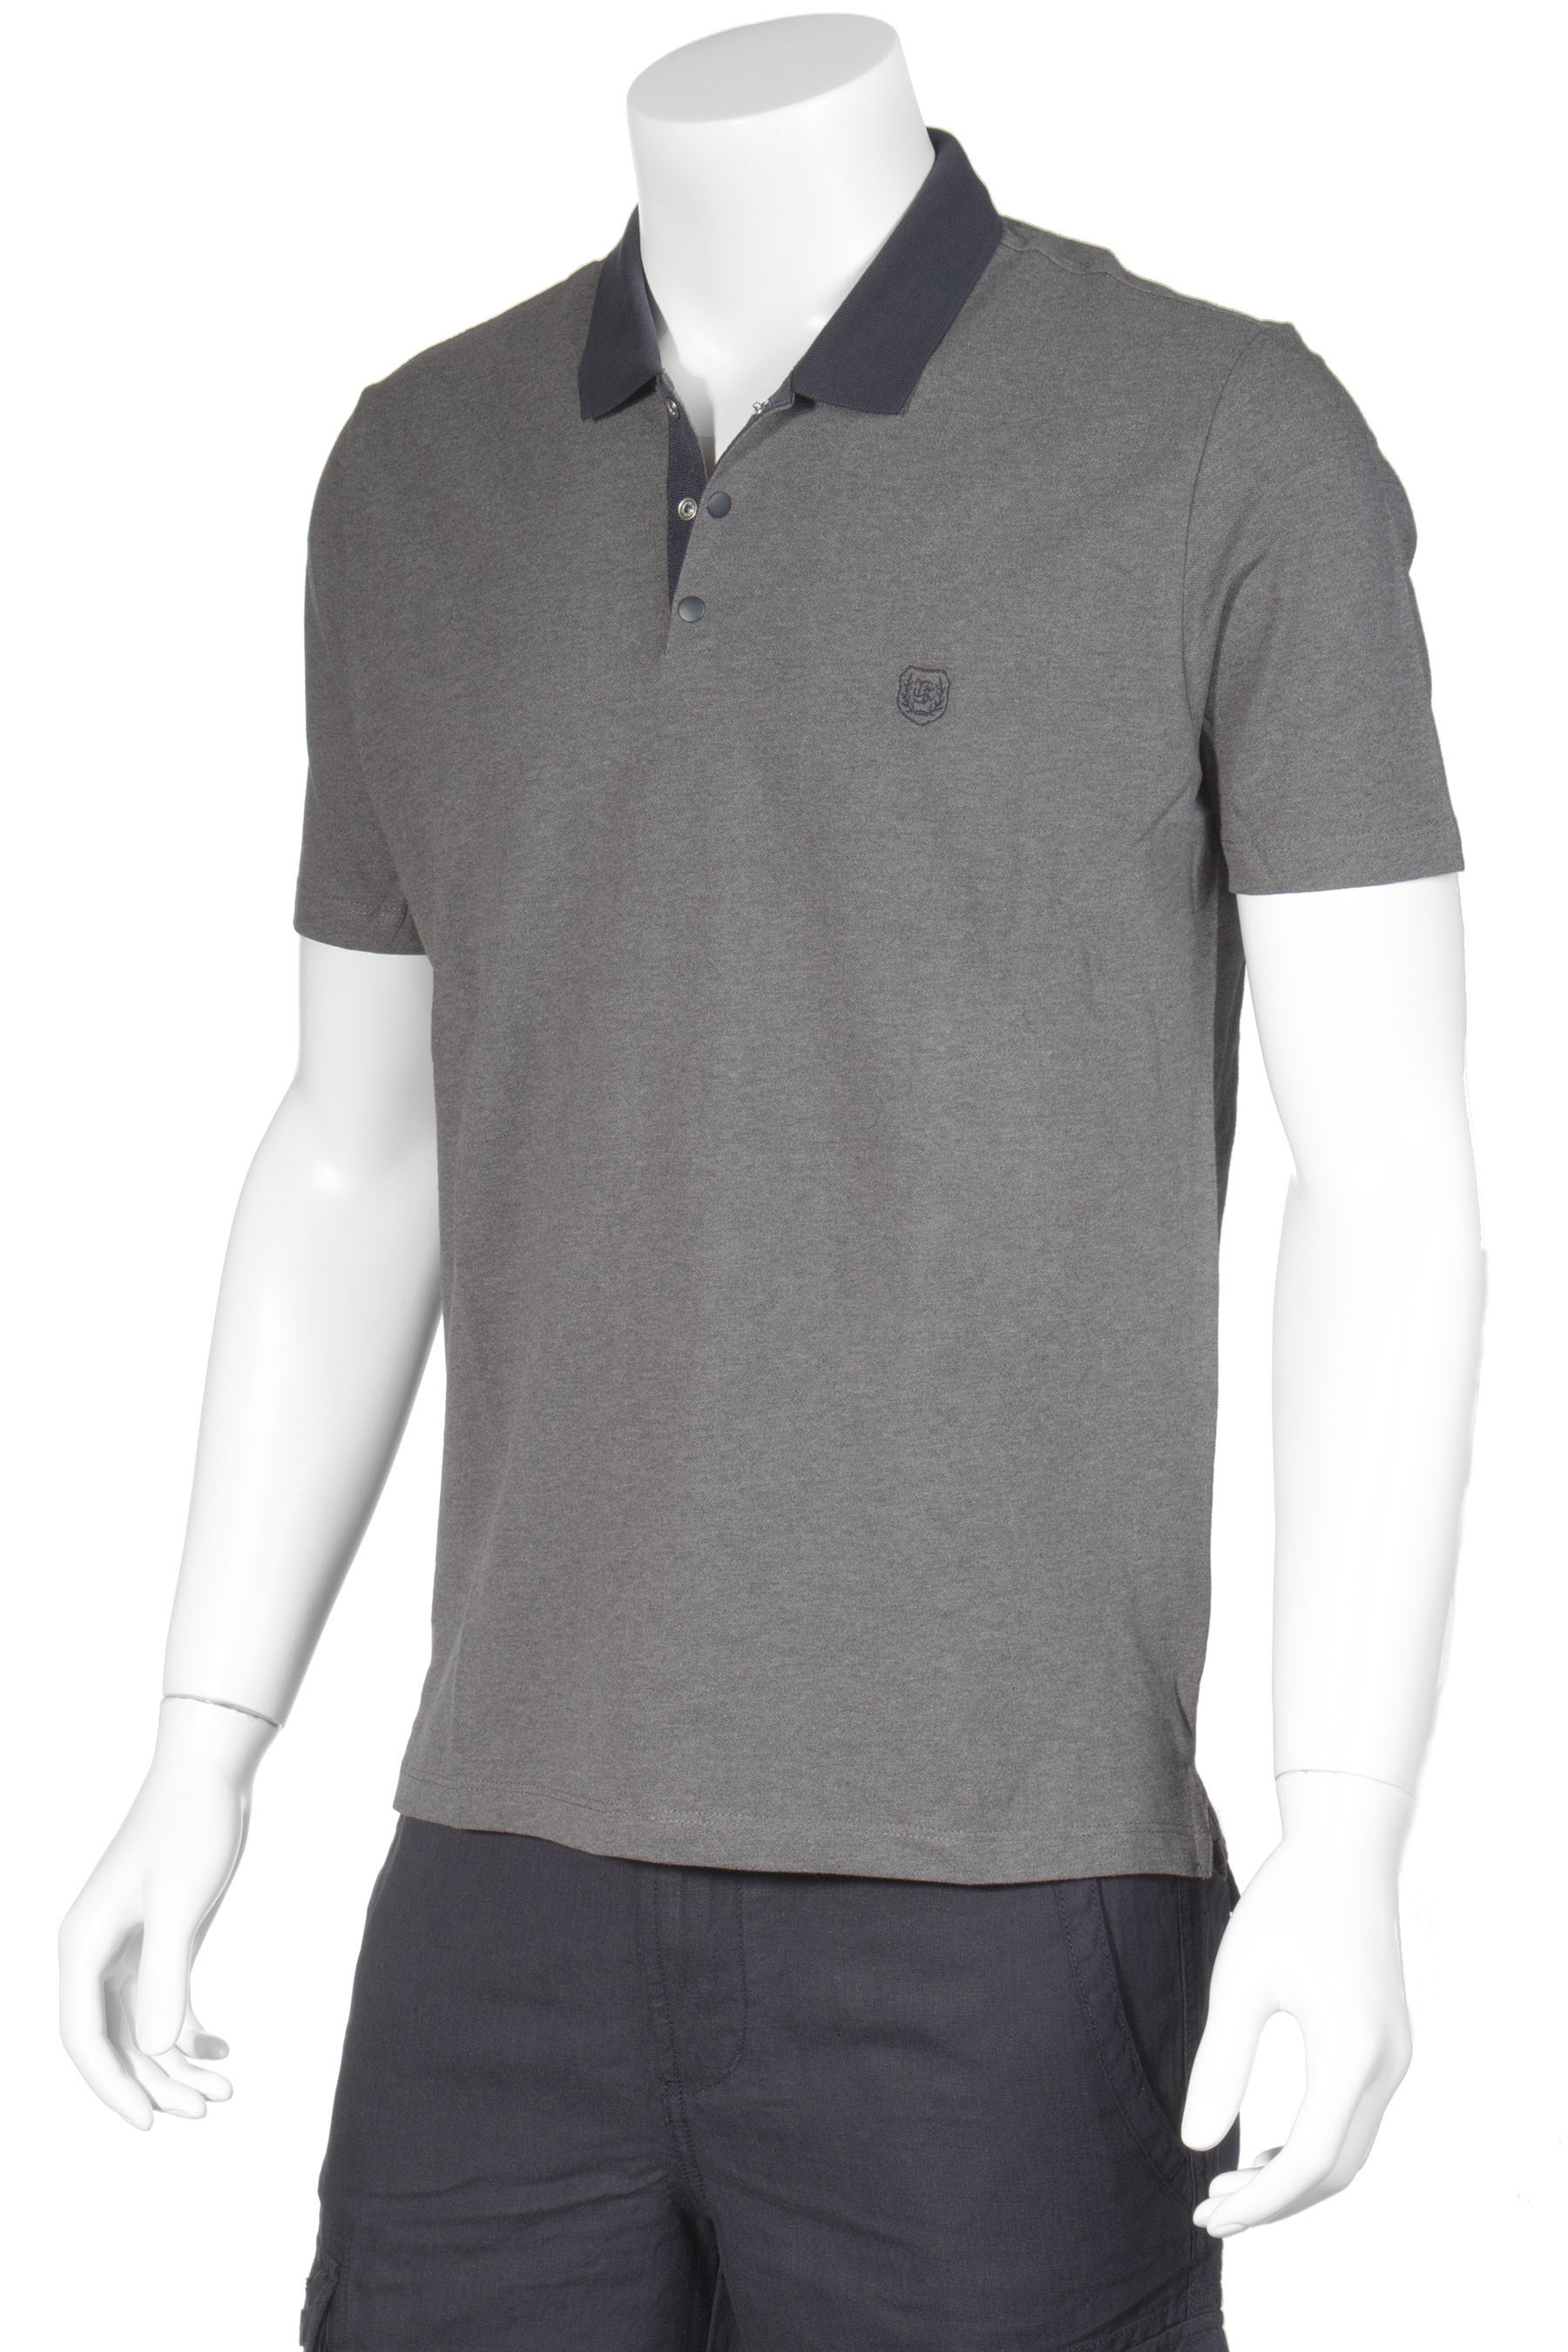 THE KOOPLES Polo Shirt Contrast Collar | Polos | Clothing | Men